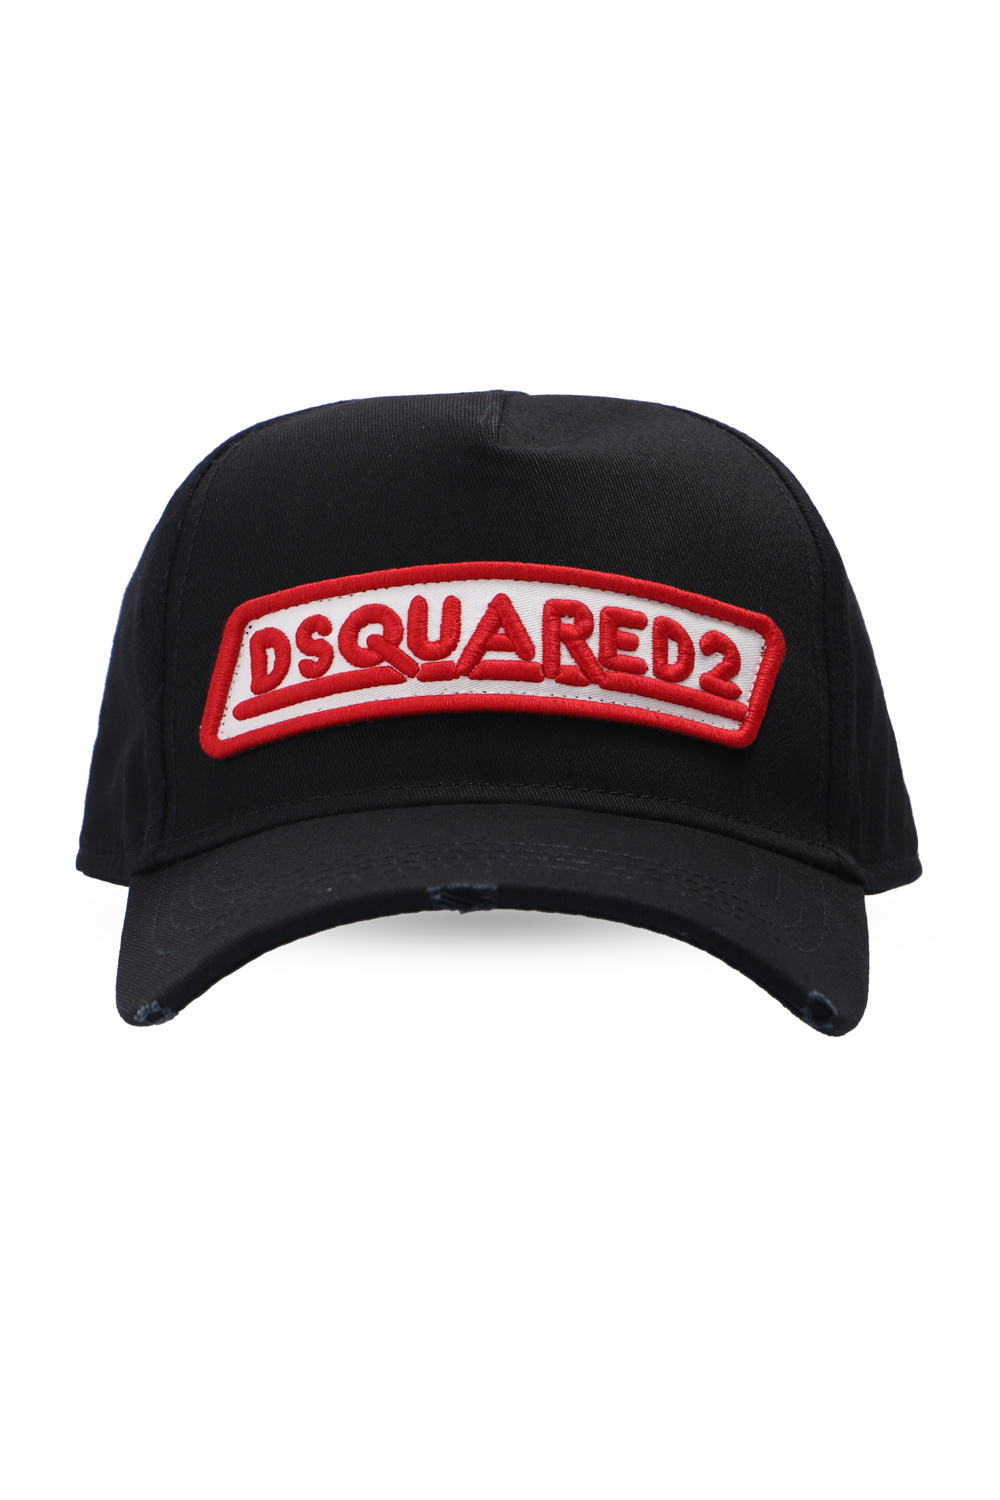 Dsquared2 hat eyewear s brown wallets T Shirts